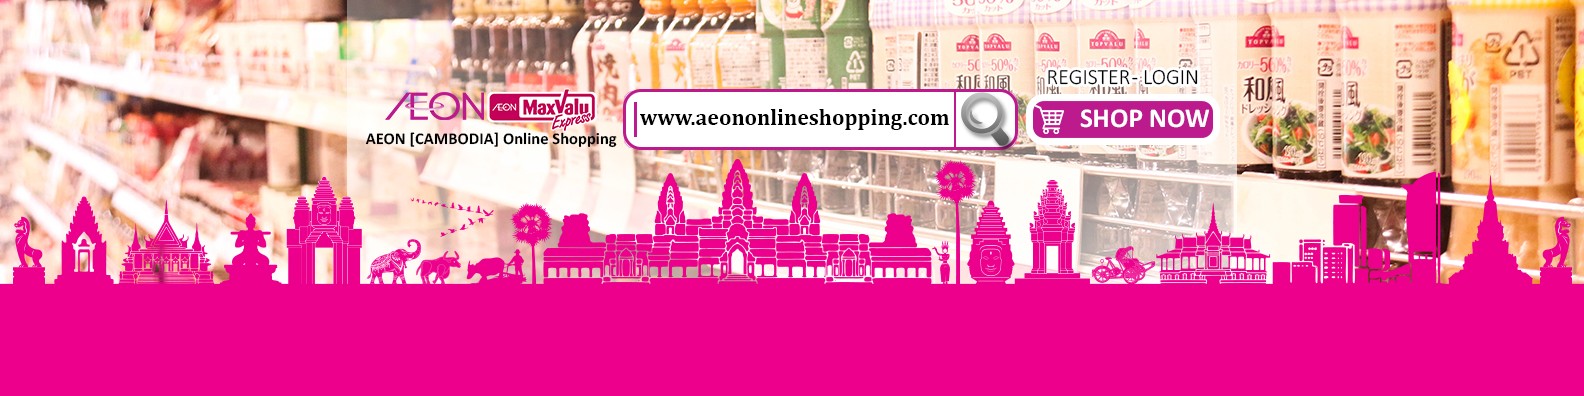 Shopping aeon online Trang chủ